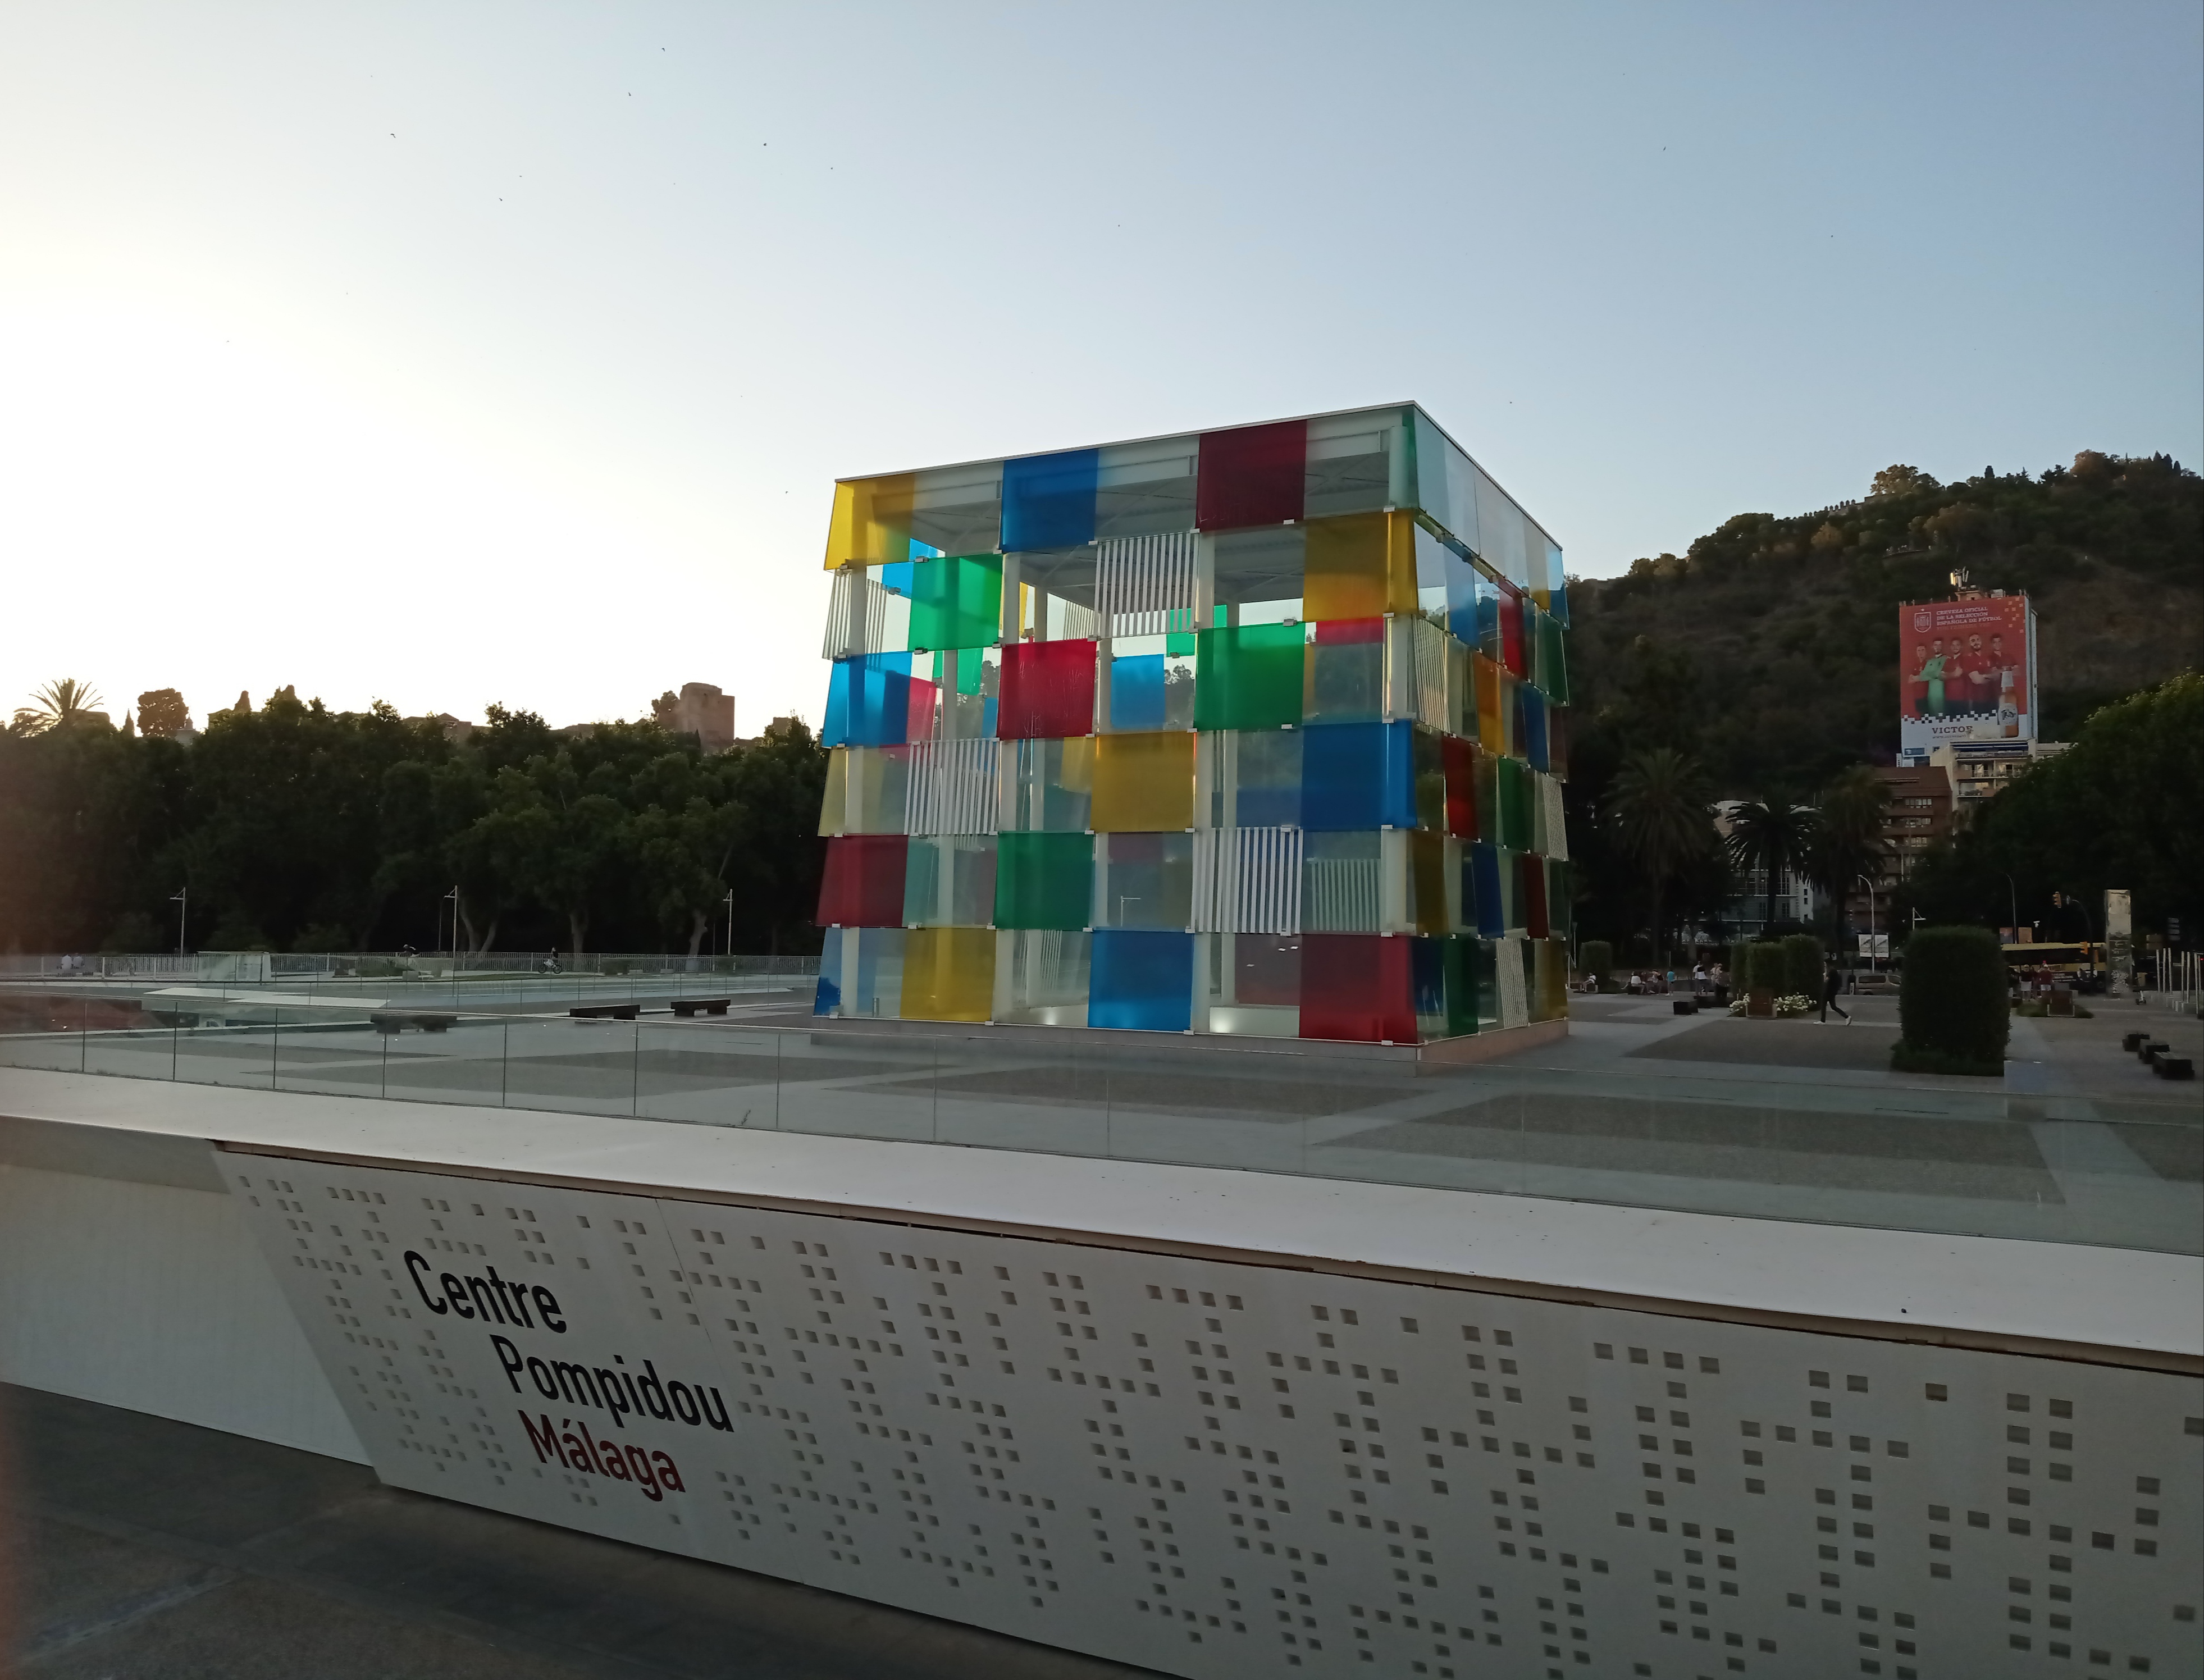 Centar Pompidou Malaga